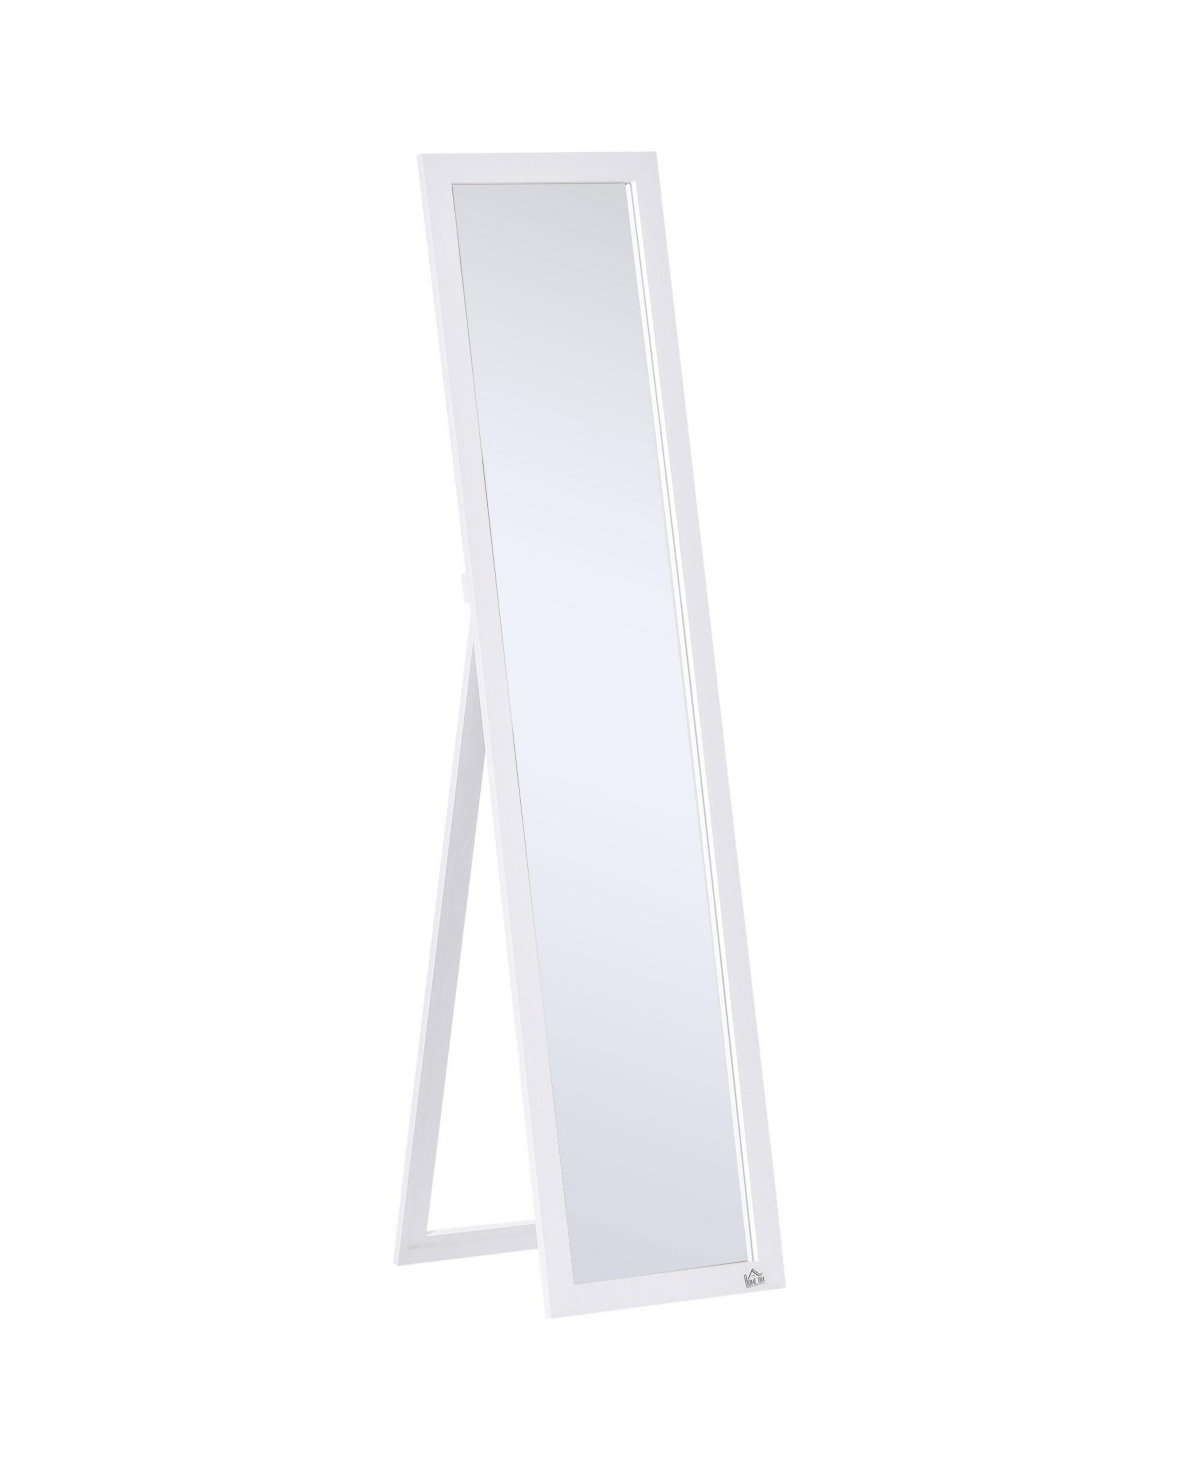 62.5" Wall Hanging Full Length Mirror, Standing Bathroom Mirror, White - White